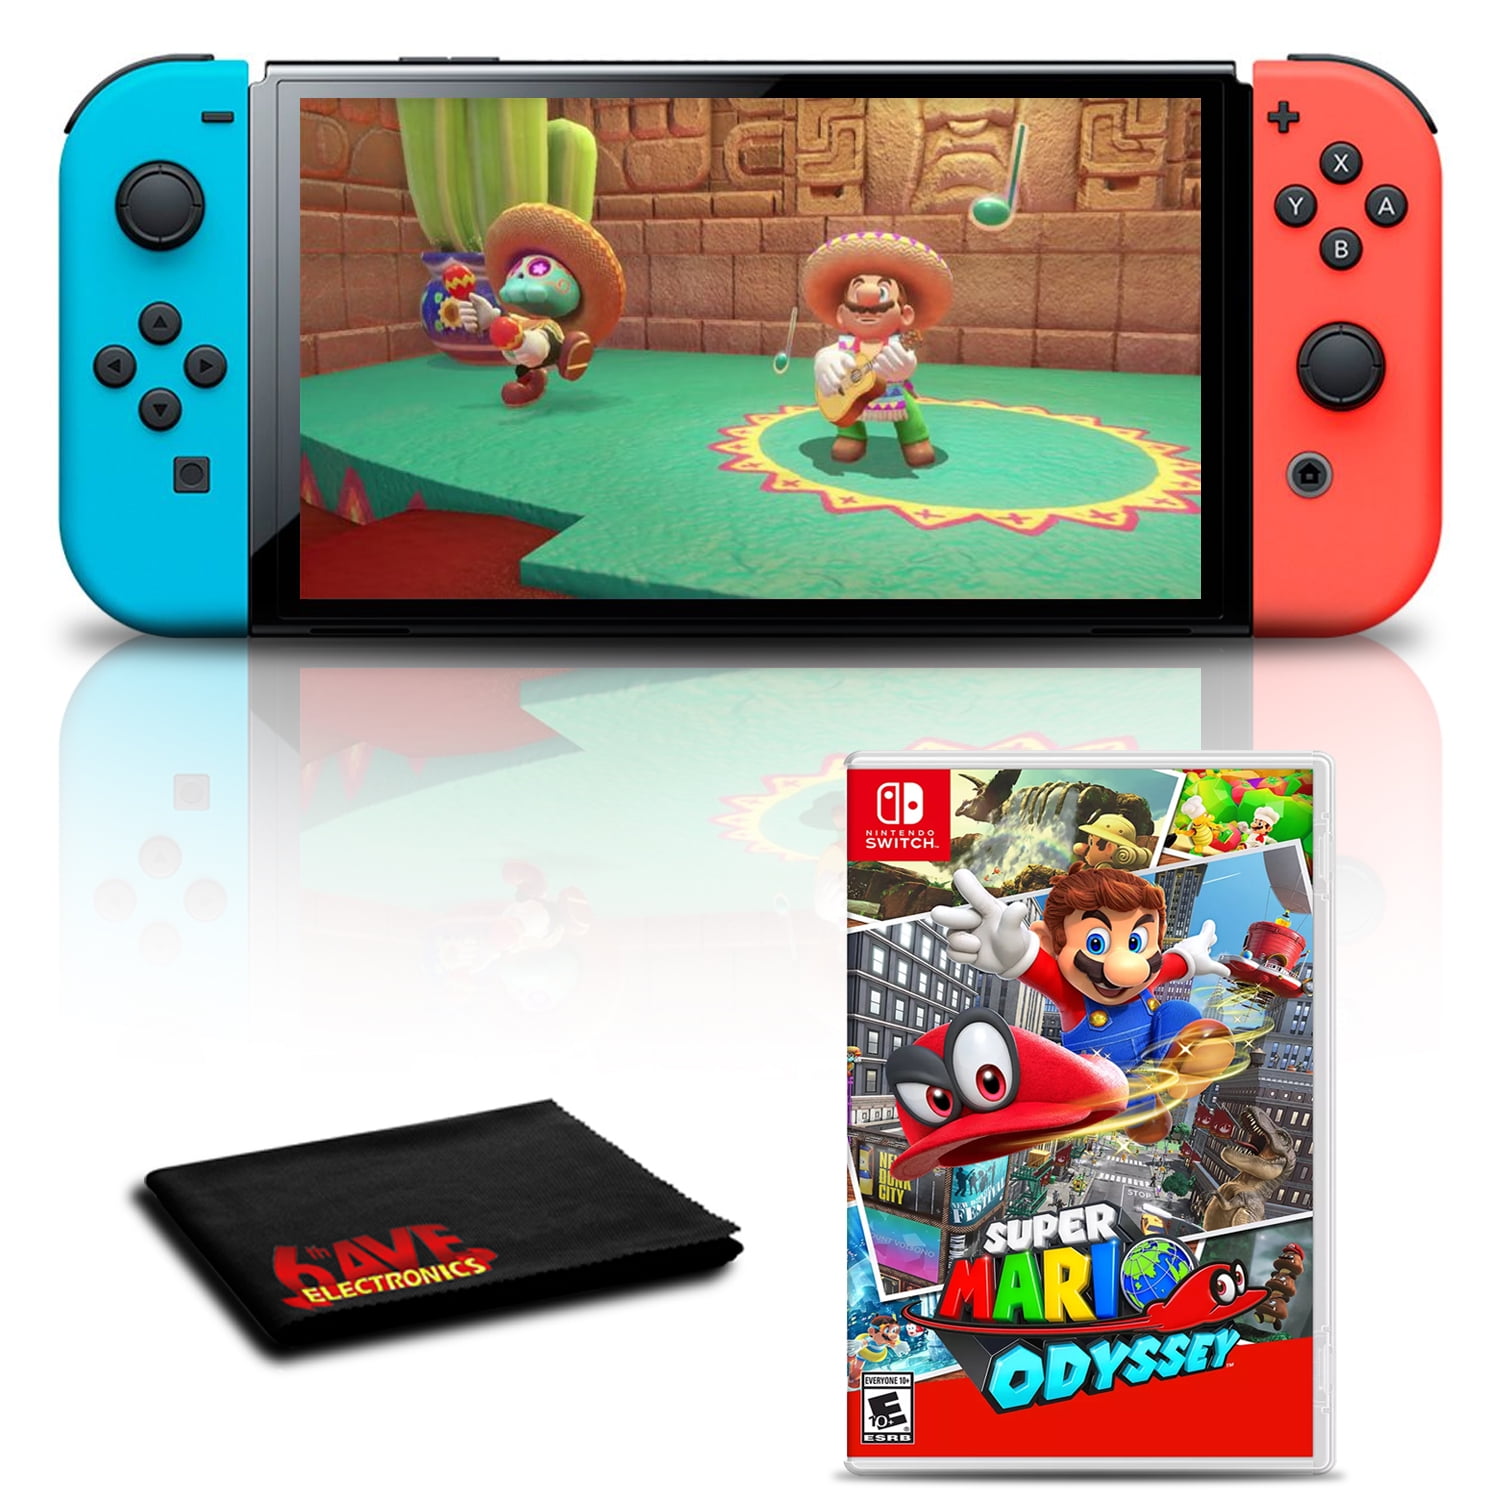 Super Mario Odyssey Nintendo Switch Game Deals 100% Official Original  Physical Game Card Platformer Genre for Switch OLED Lite - AliExpress